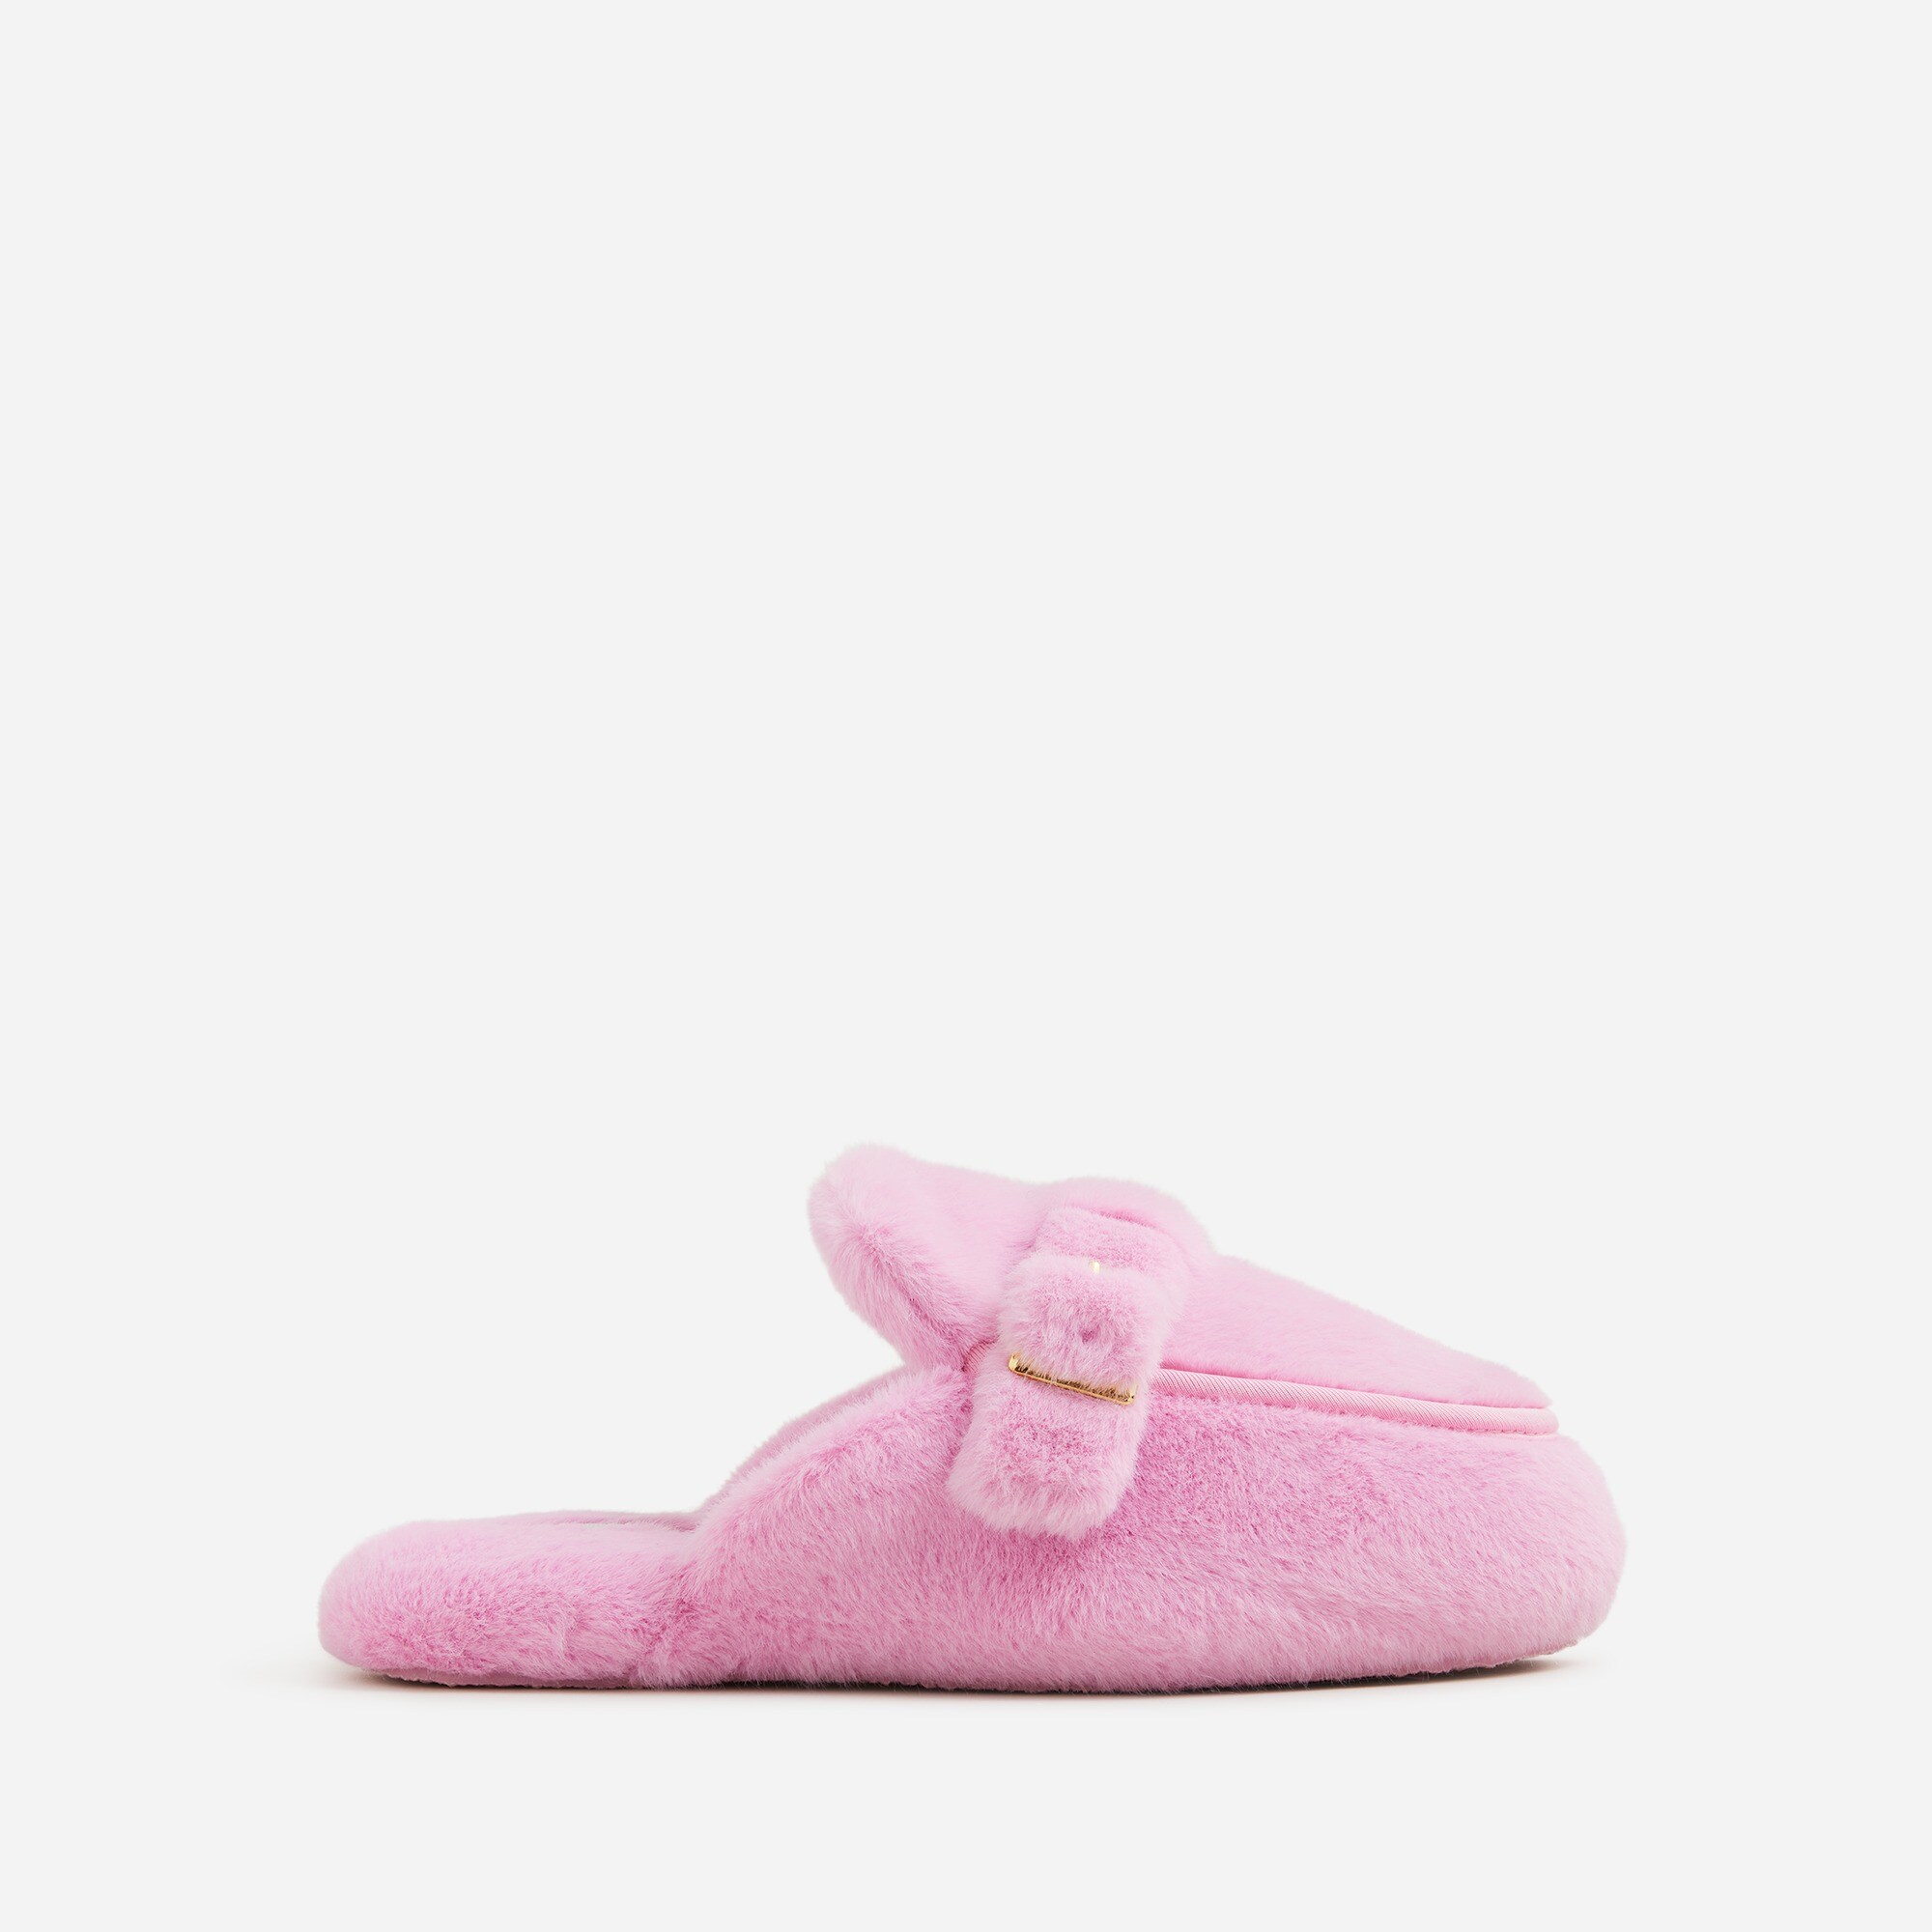  Girls' buckle slippers